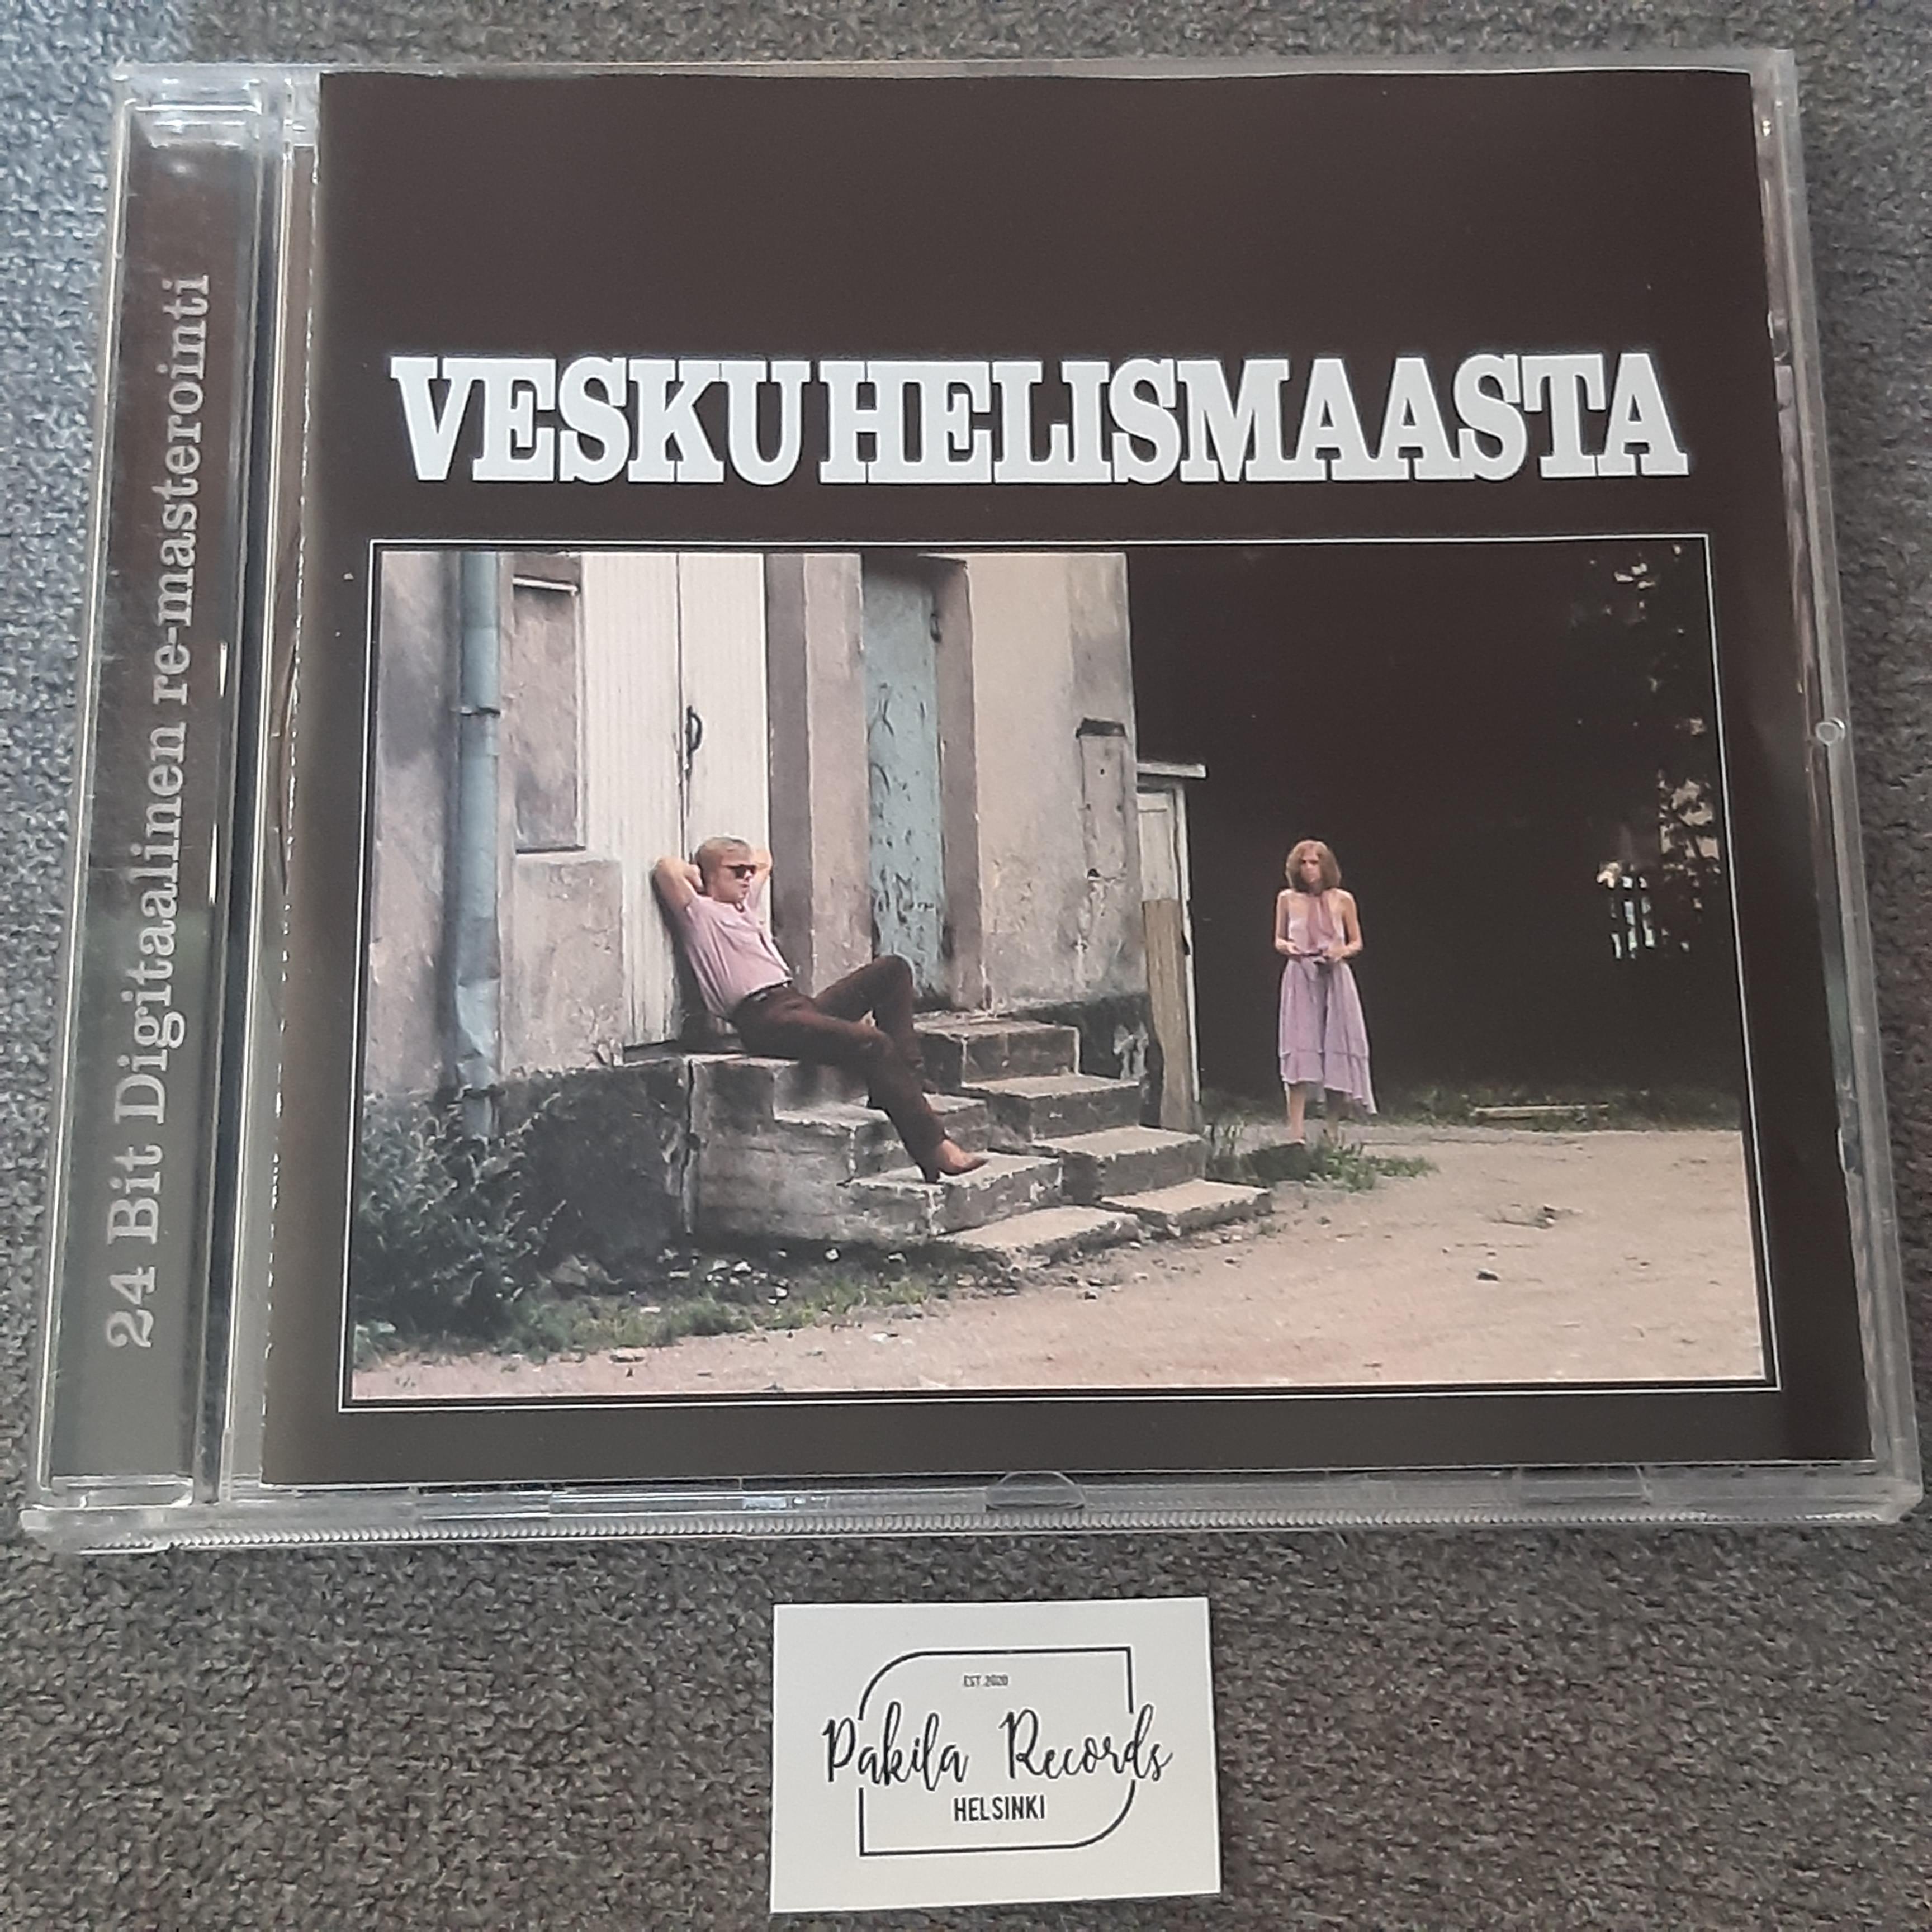 Vesa-Matti Loiri - Vesku Helismaasta - CD (käytetty)